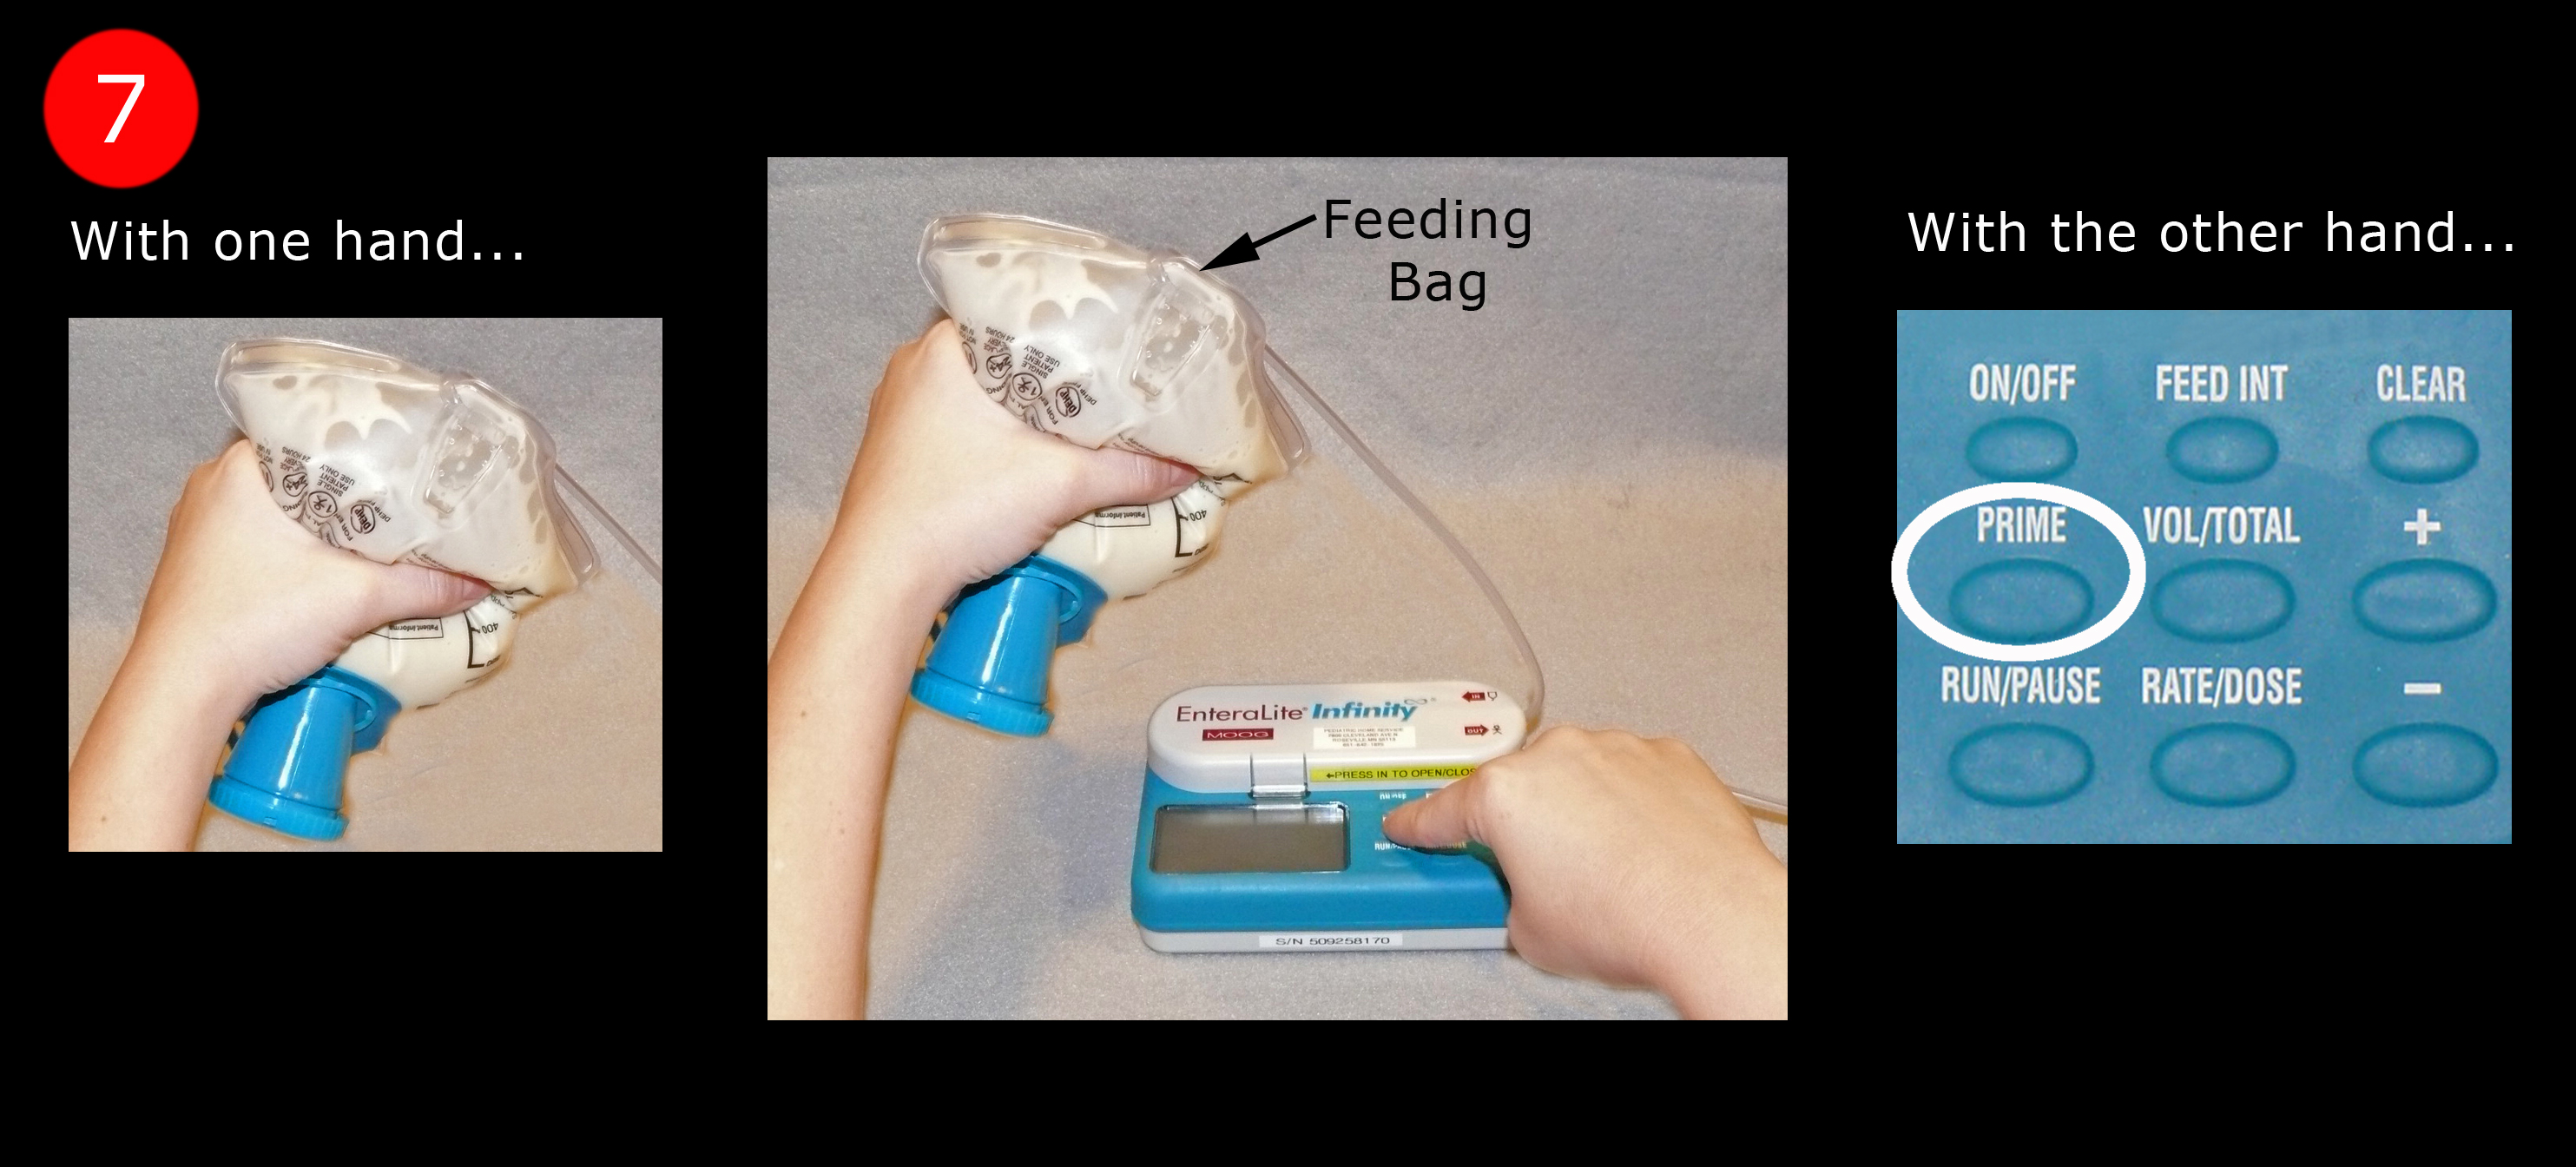 one hand holding feeding bag